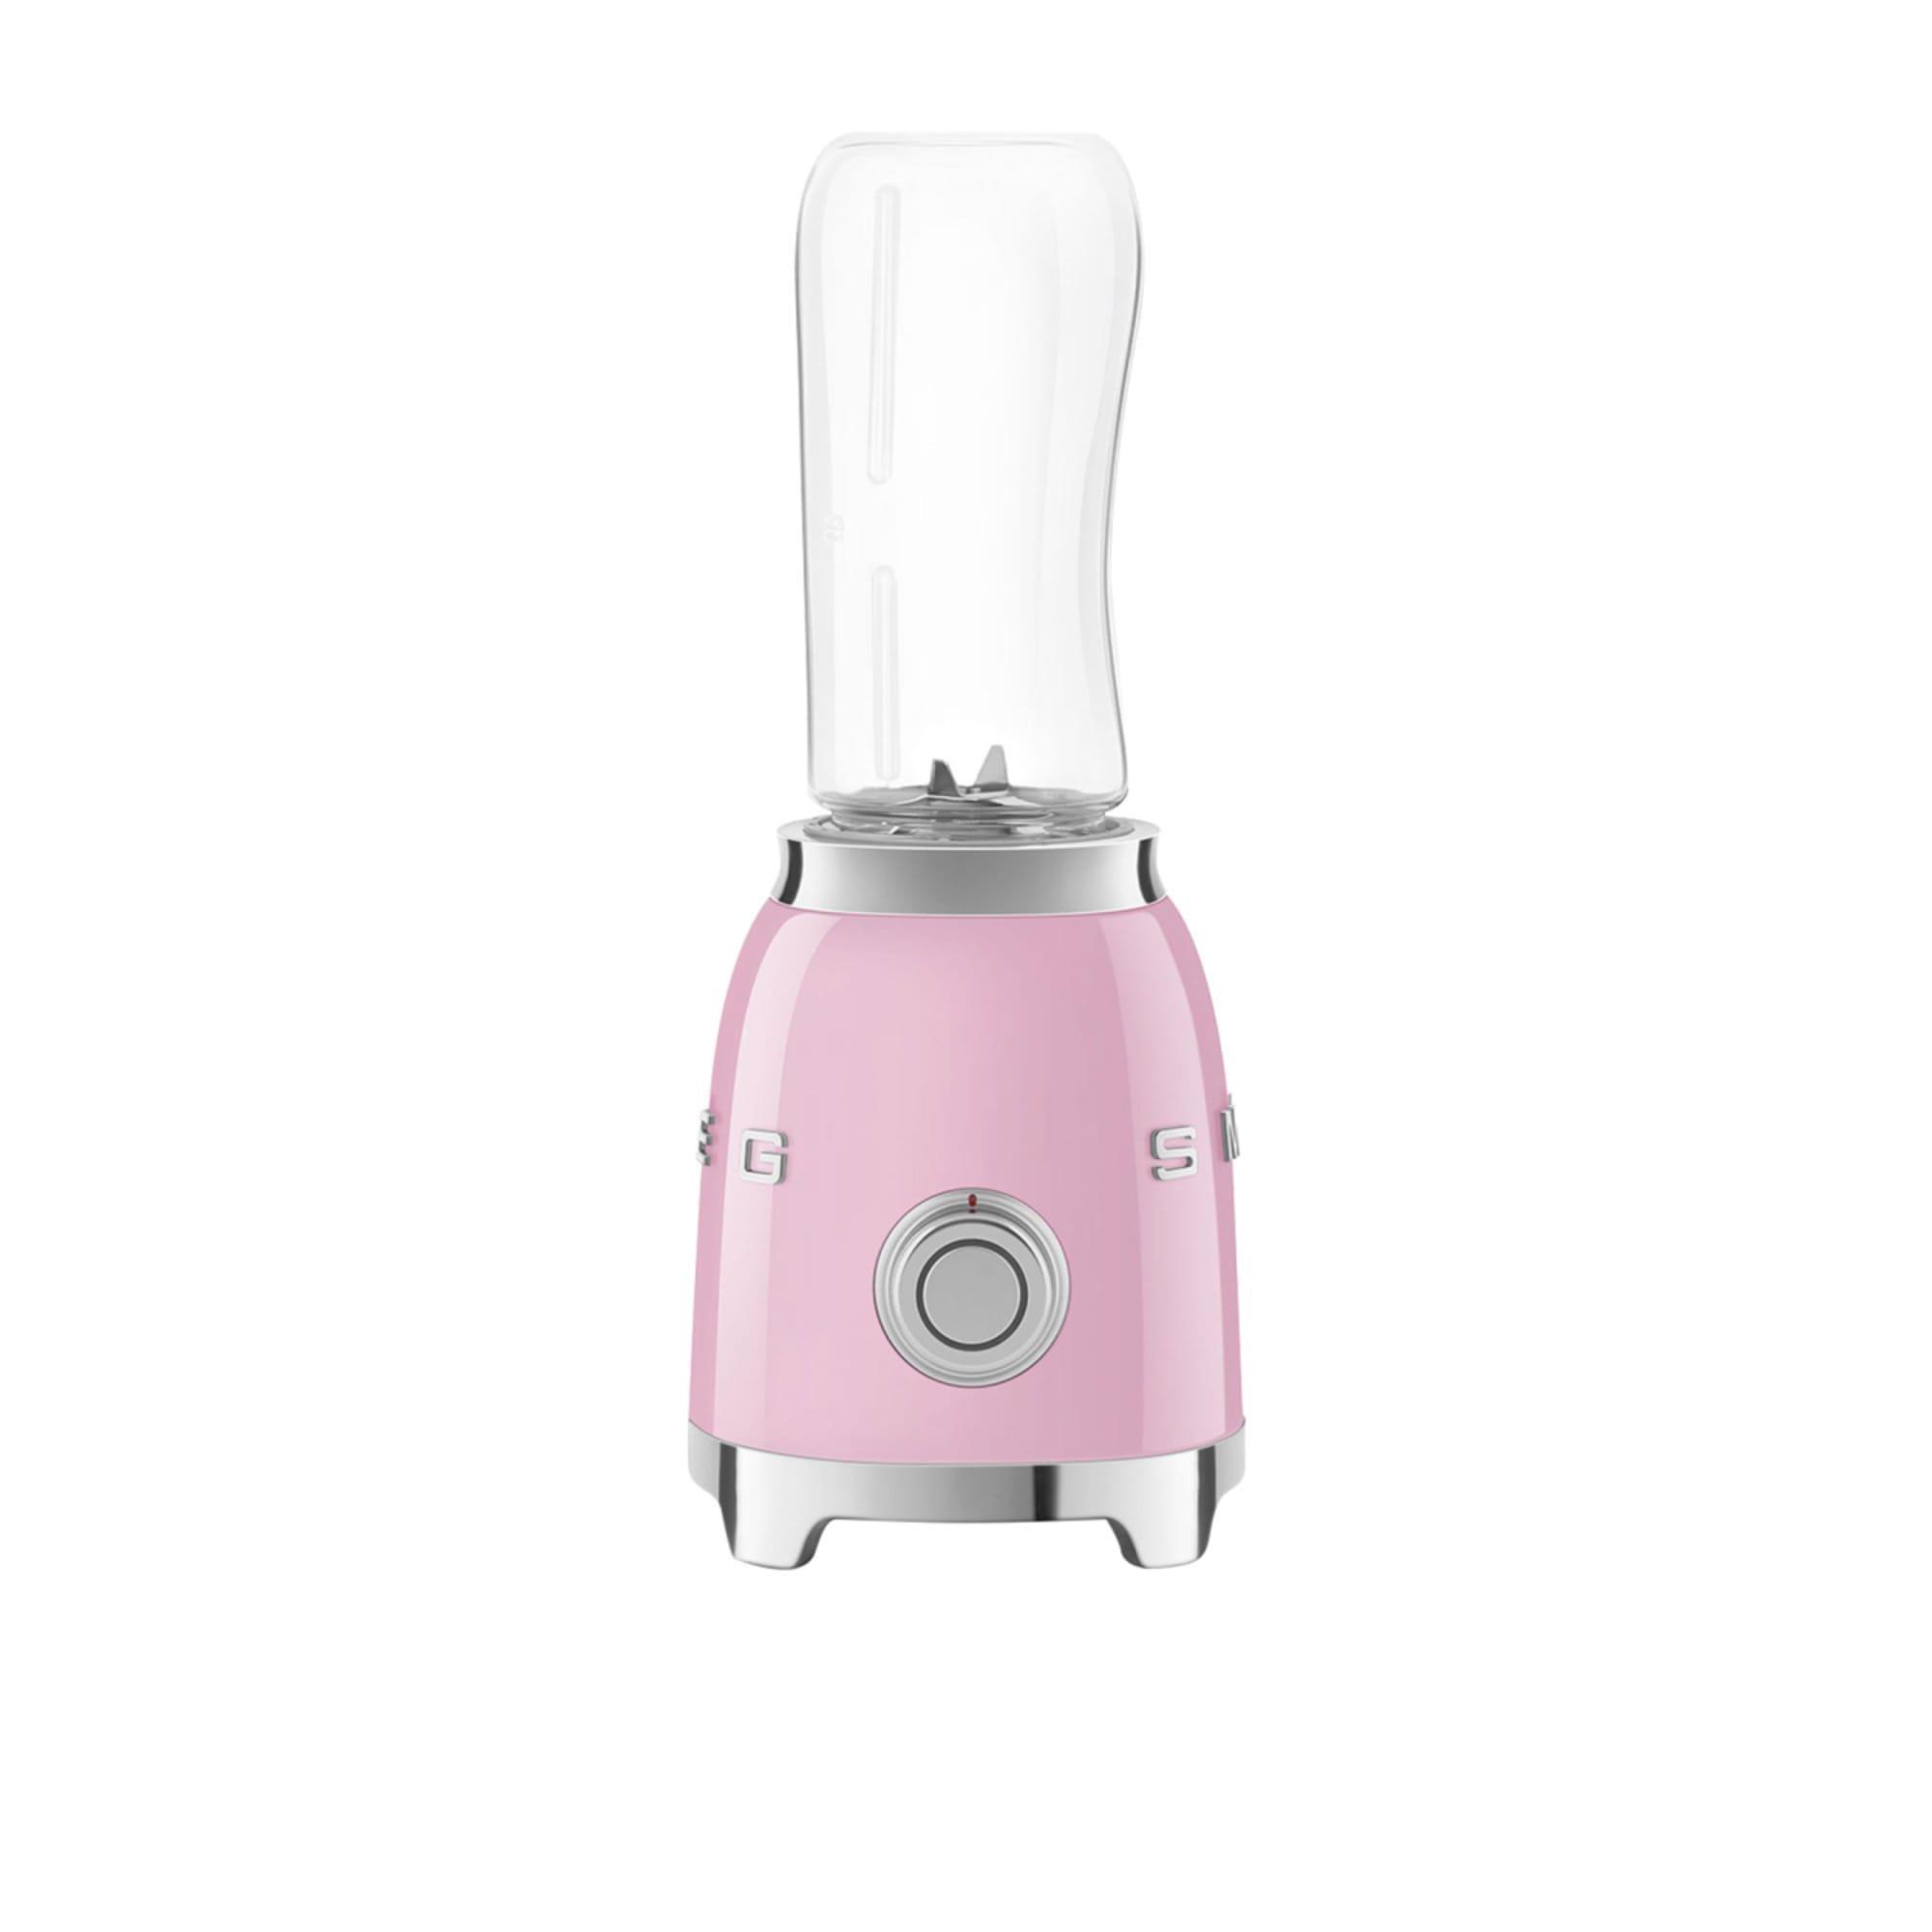 Smeg 50's Retro Style Mini Blender Pink Image 5